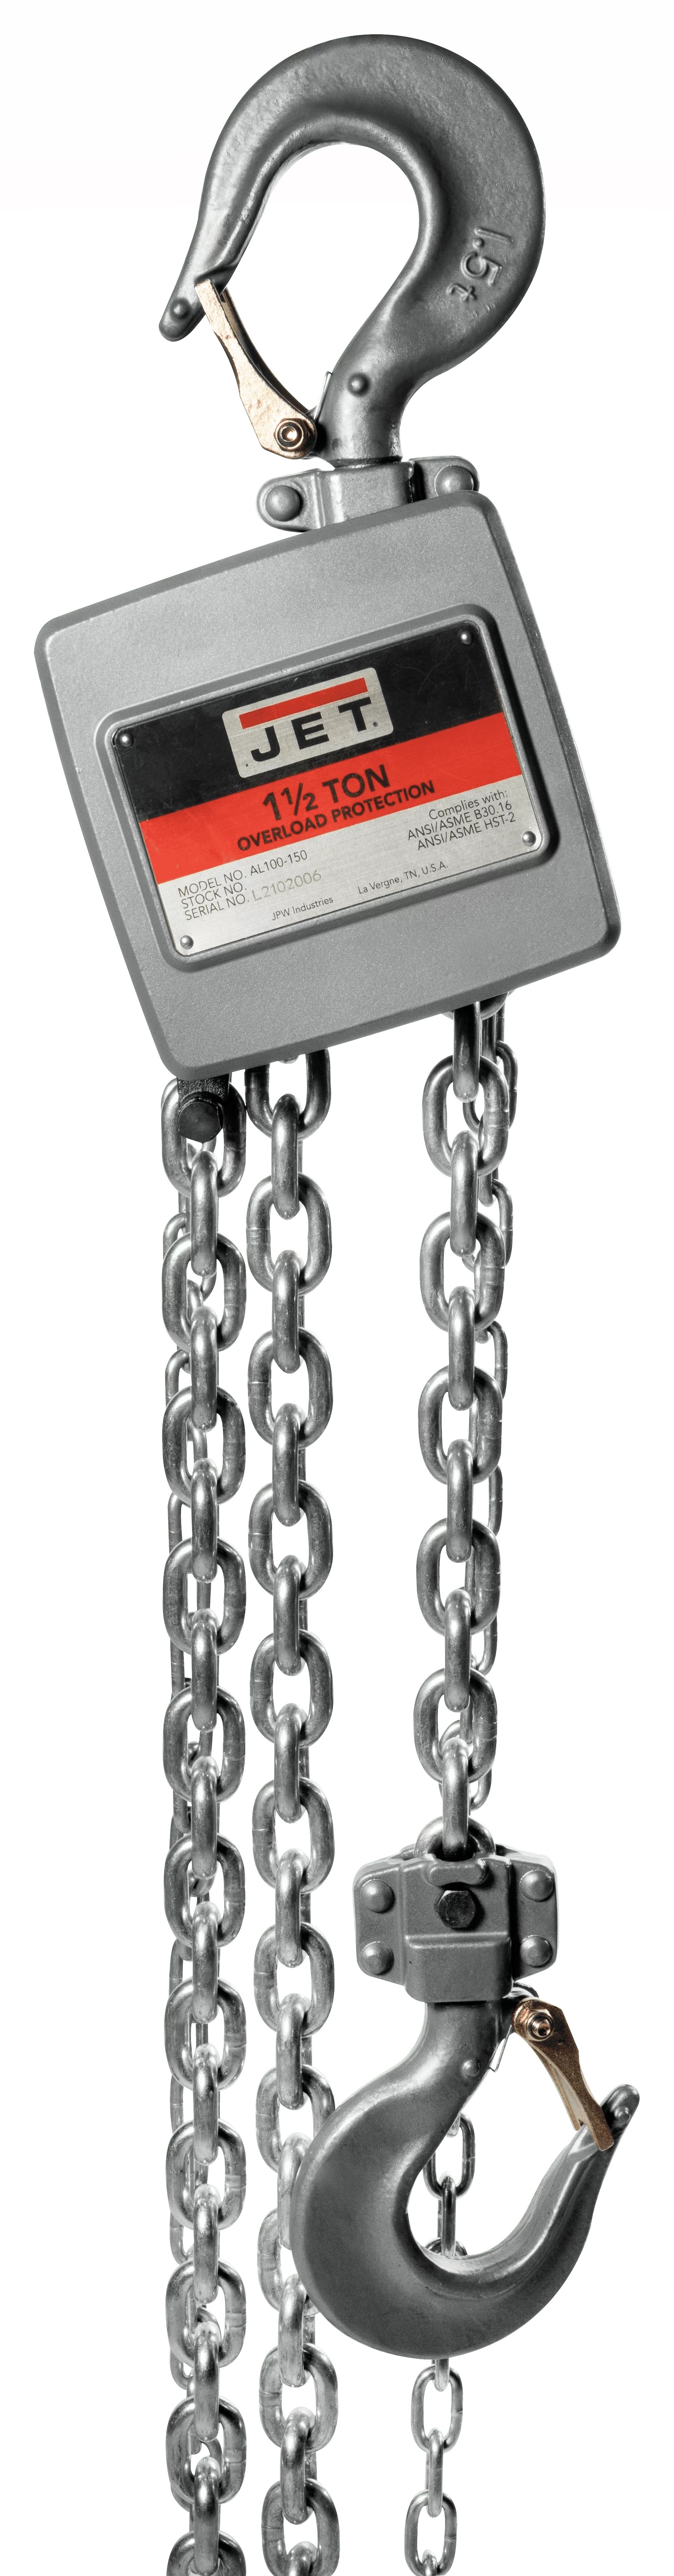 AL100-150-15 1-1/2 Ton Hand Chain Hoist with 15ft of lift